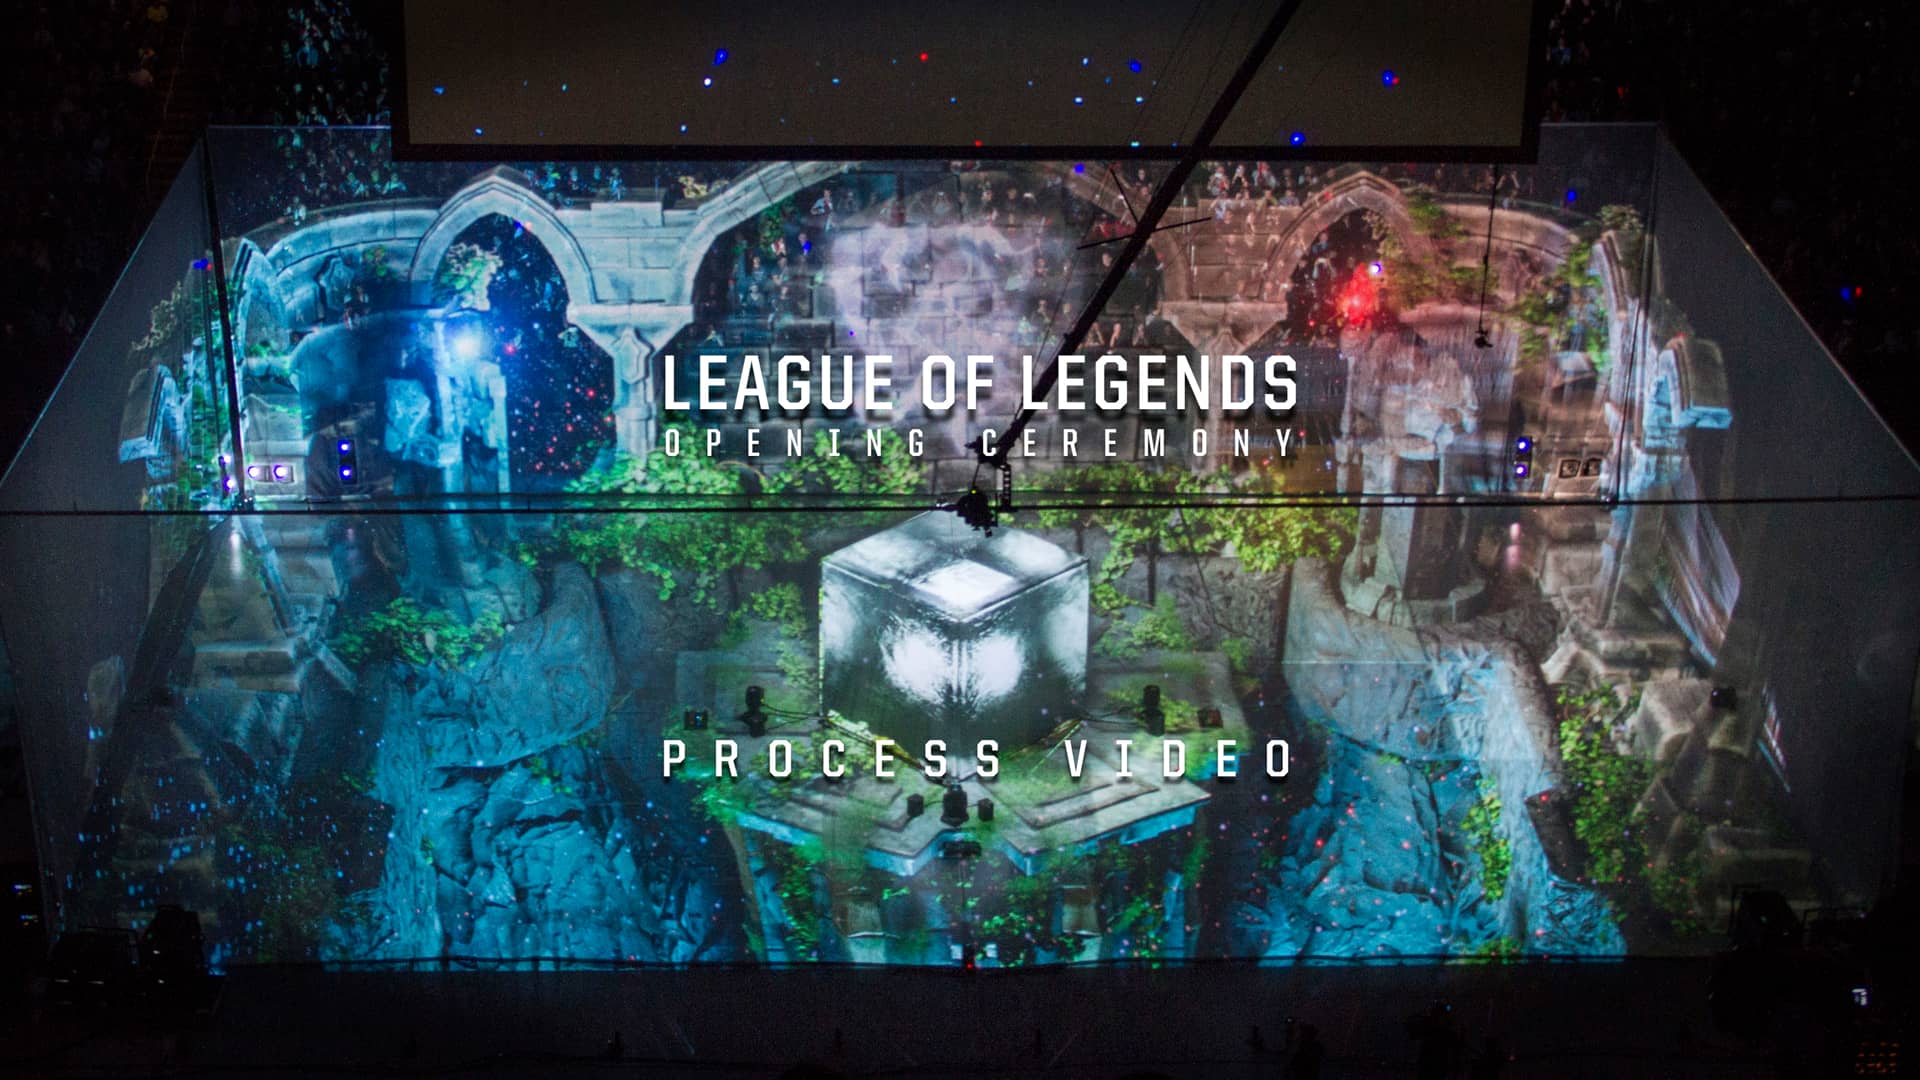 League of Legends Worlds Opening Ceremony Breakdown on Vimeo